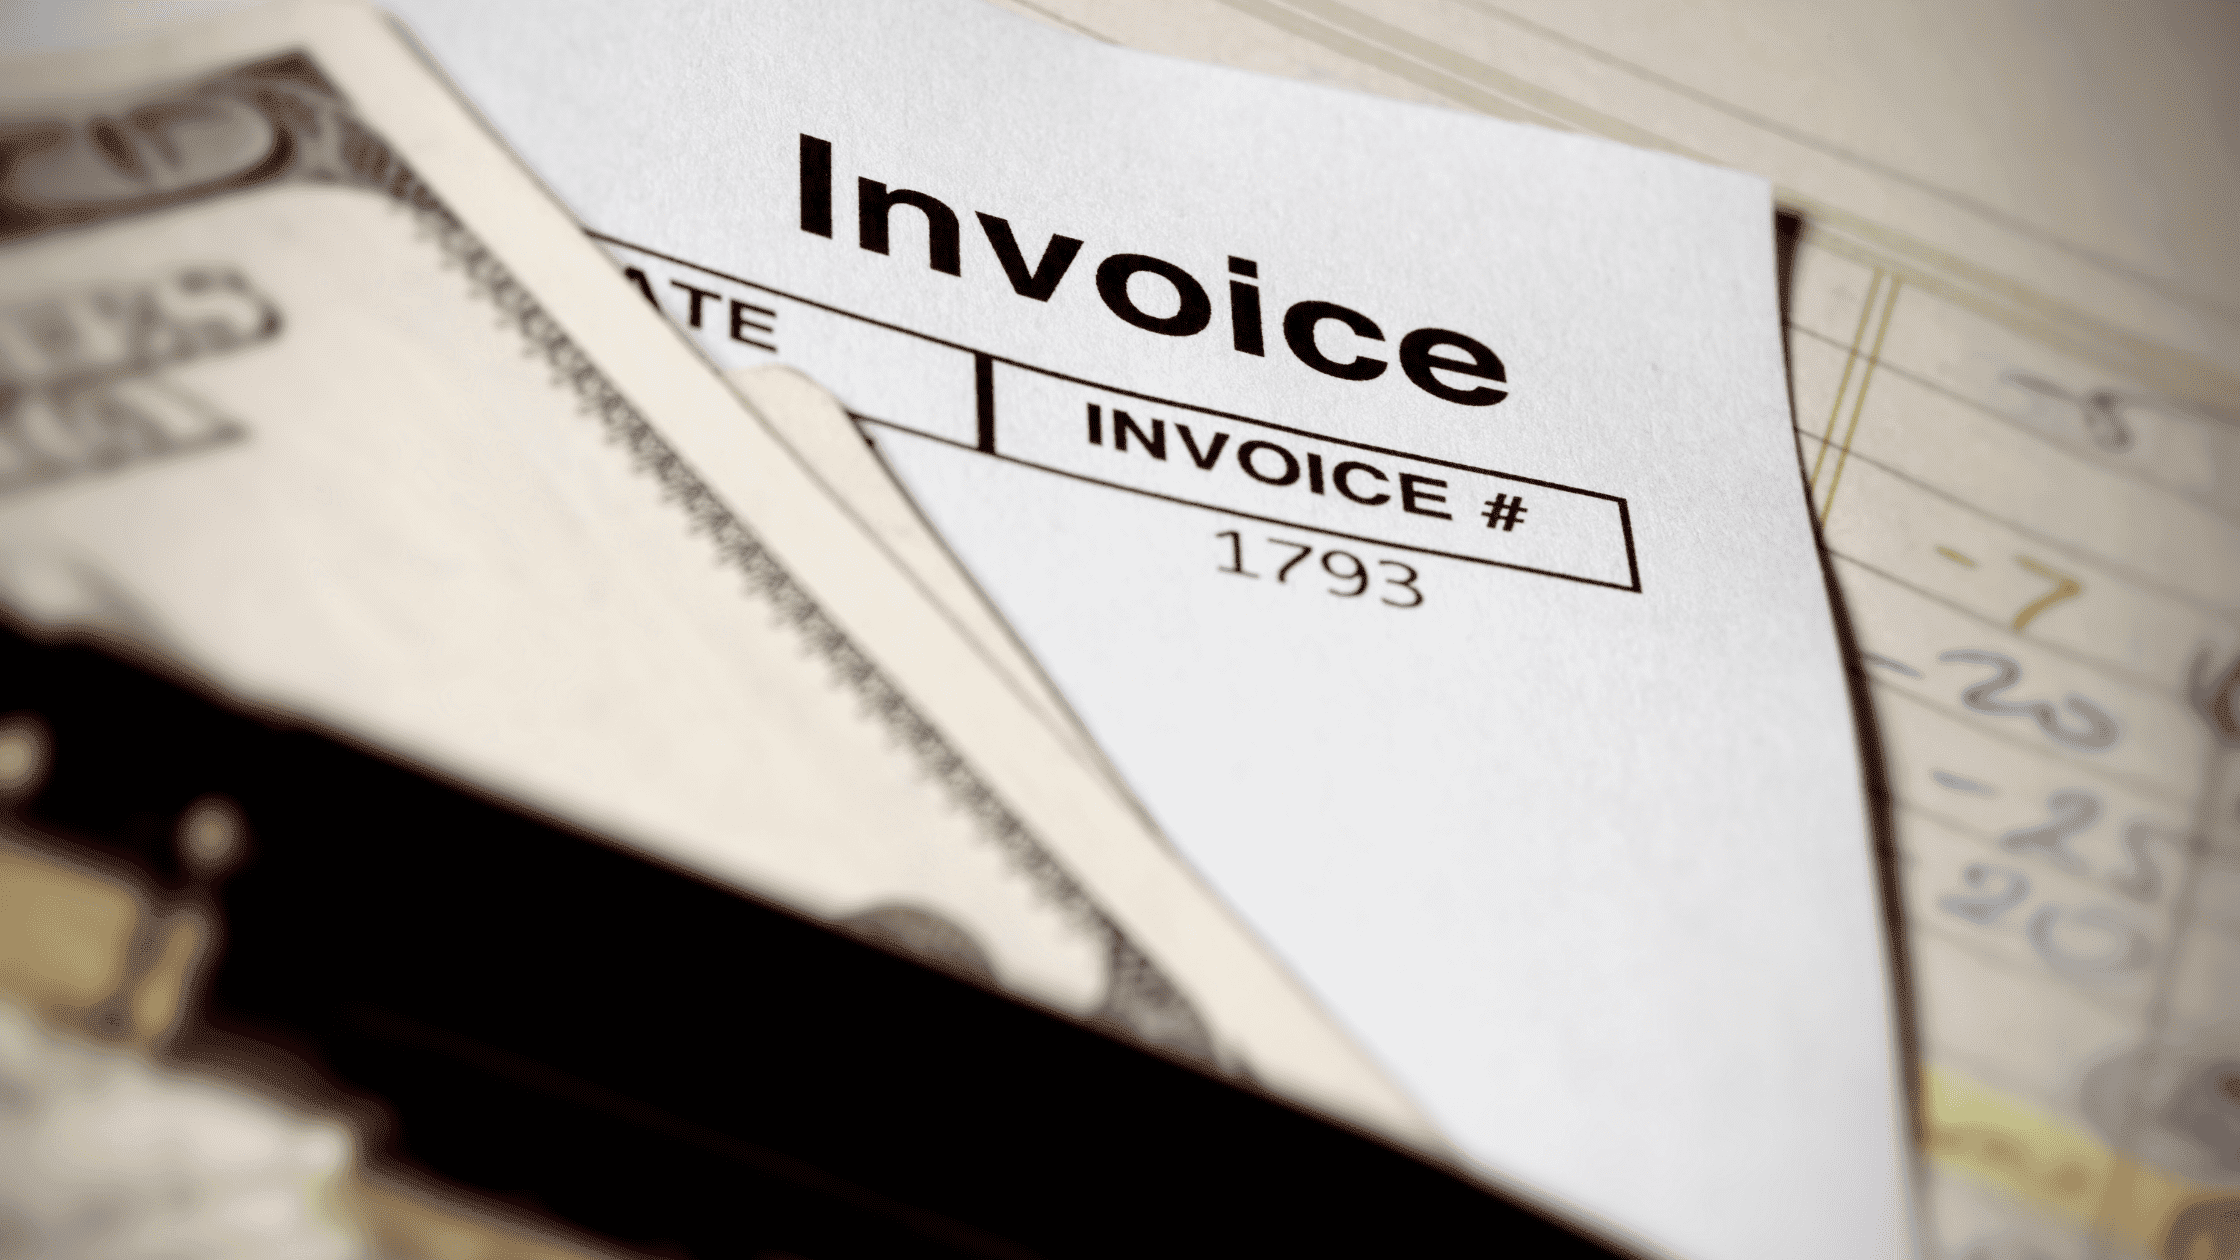 factoring invoices